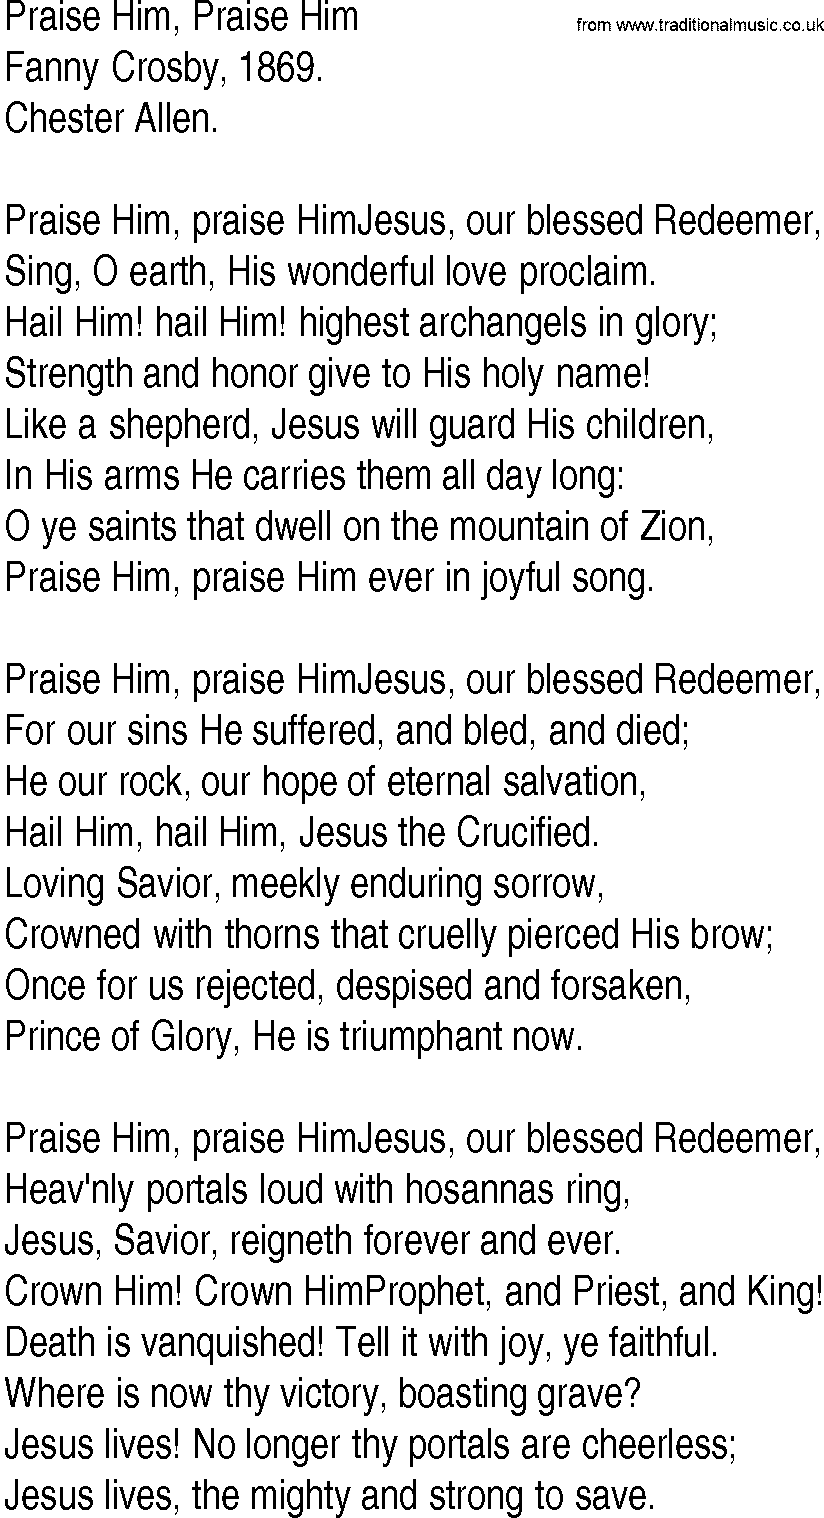 Hymn and Gospel Song: Praise Him, Praise Him by Fanny Crosby lyrics